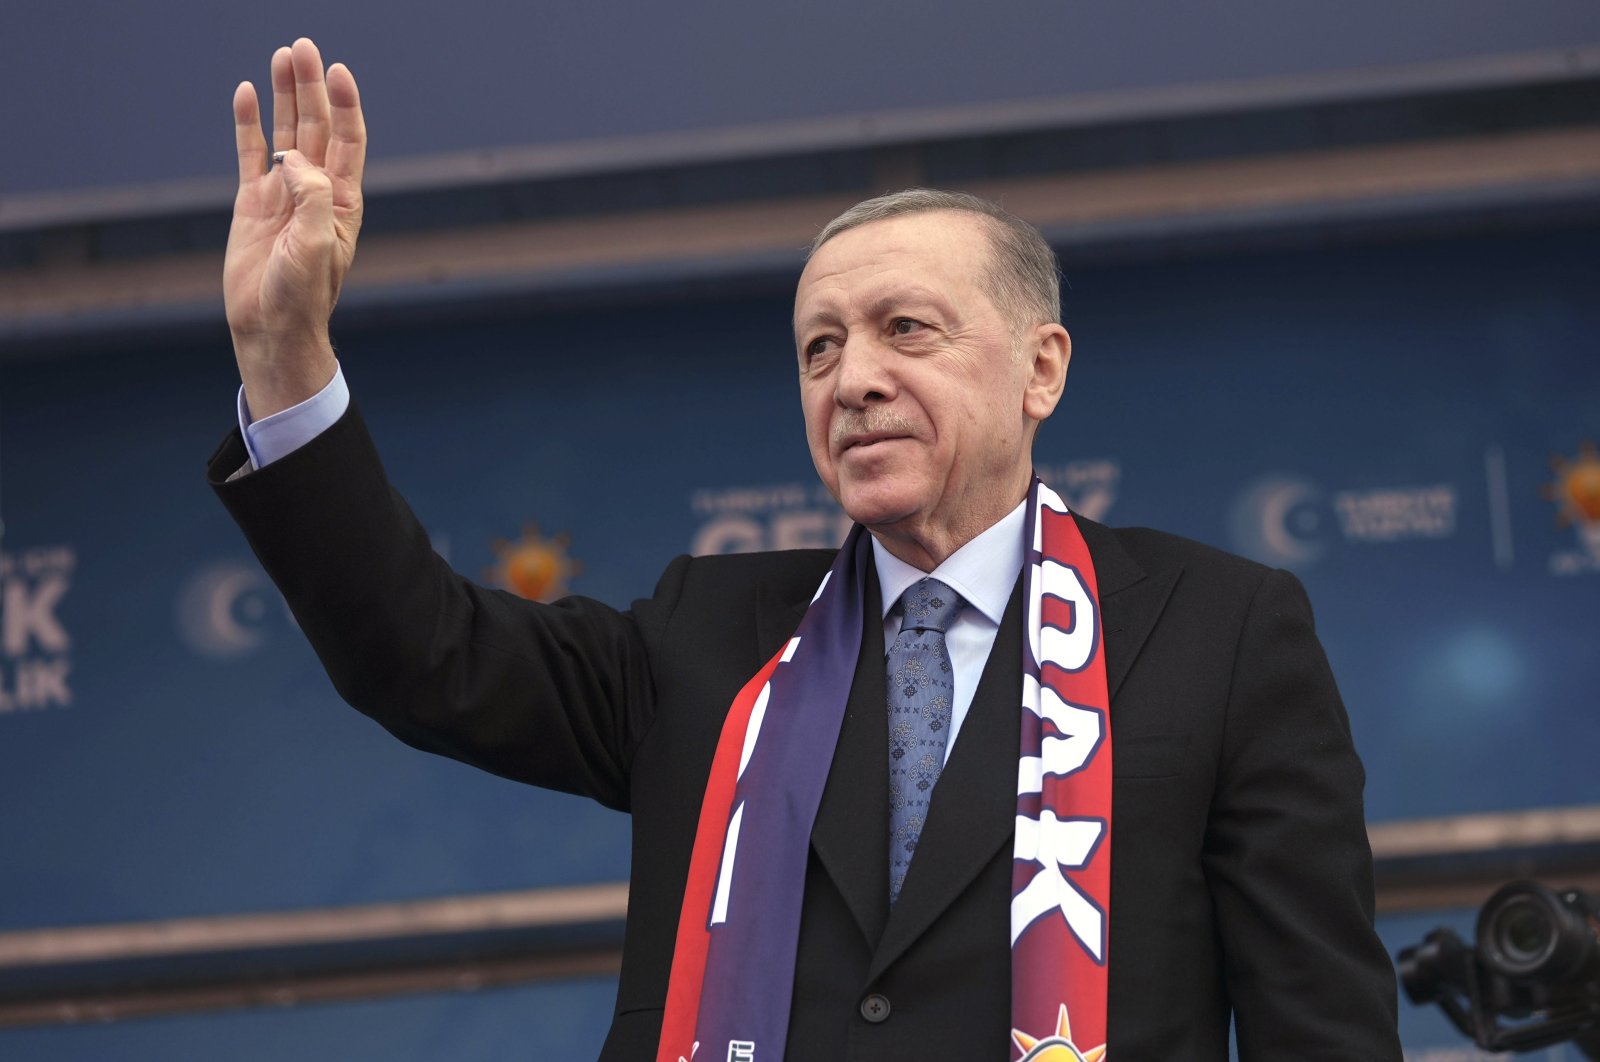 Erdoğan set to travel to UAE, Egypt for boosting ties, int’l summit